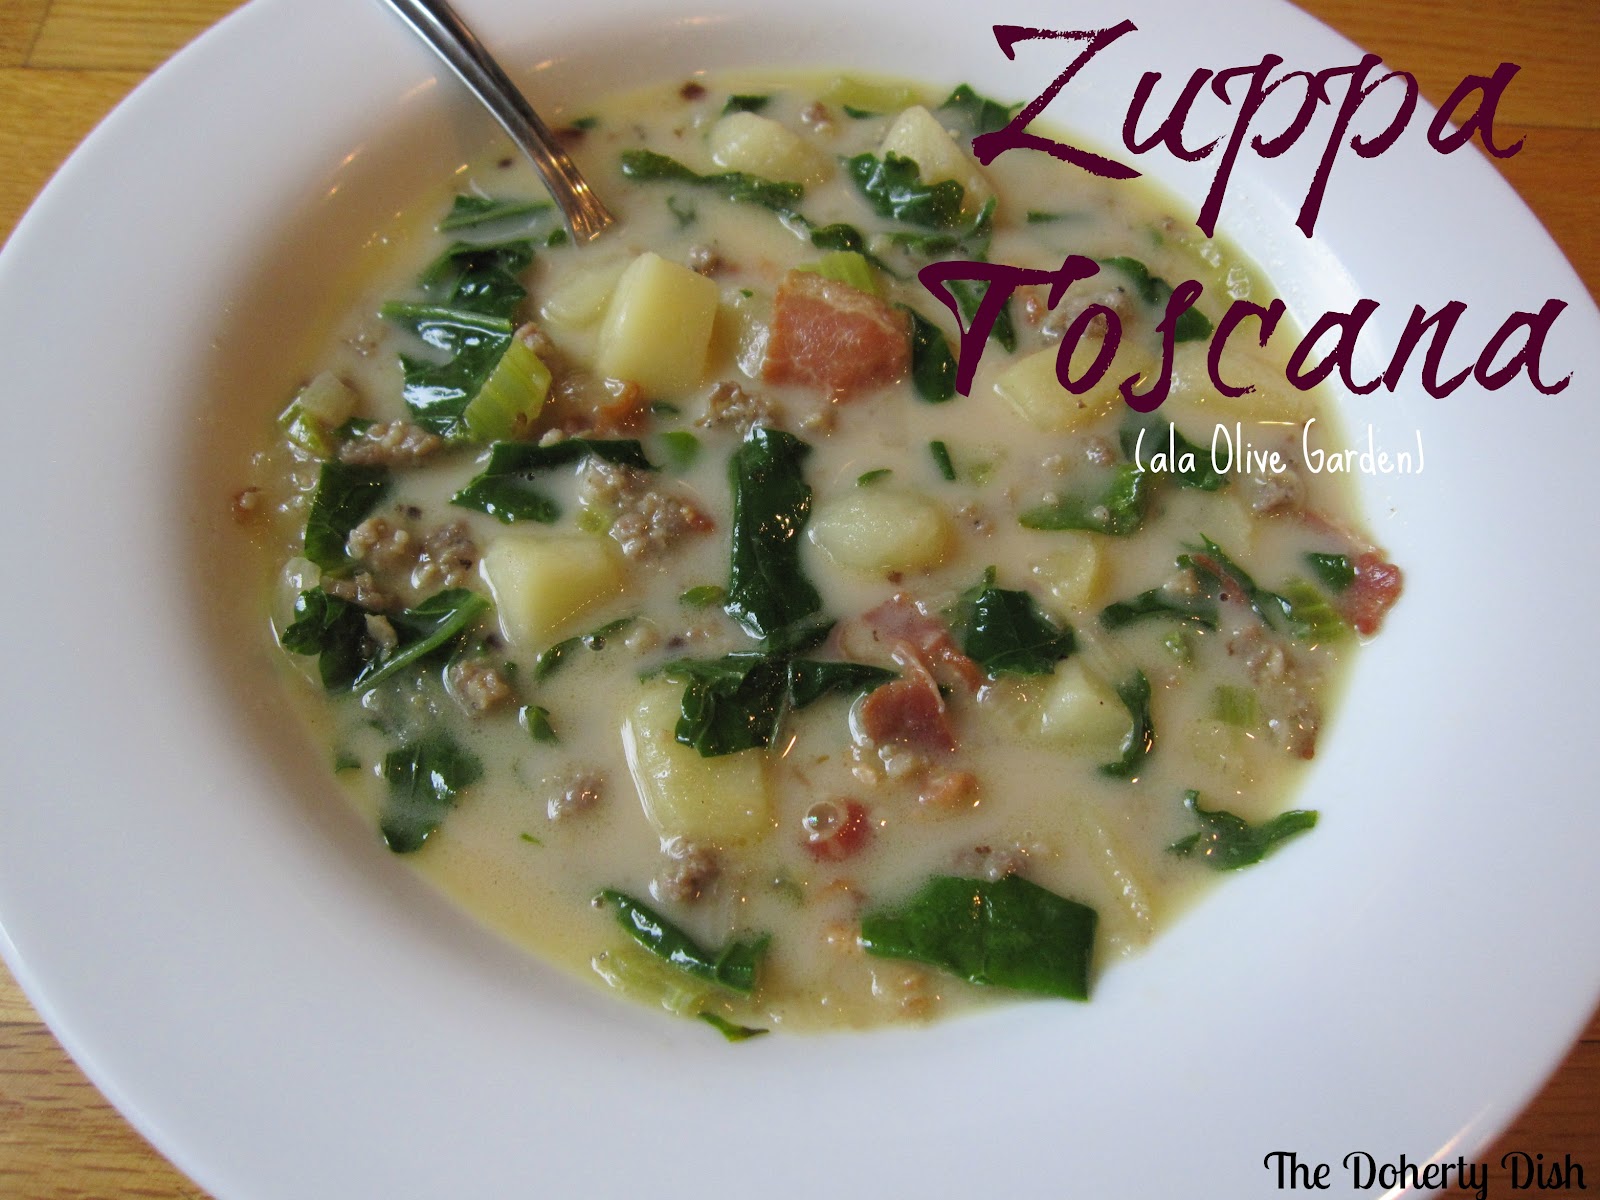 The Doherty Dish: Zuppa Toscana (ala Olive Garden)